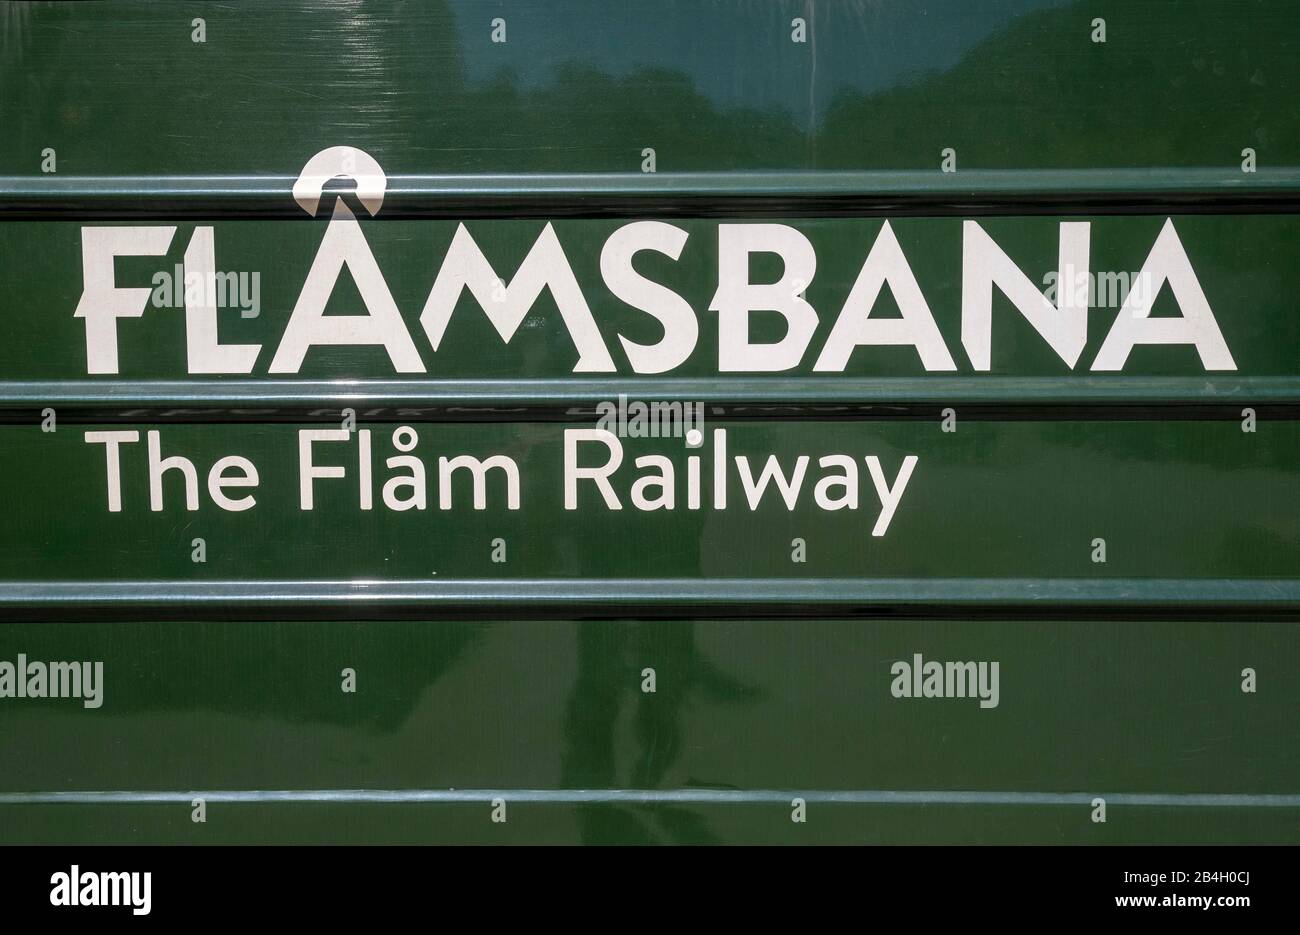 Voyage avec la Flambahn, Eisenbahreise, train vert avec lettrage blanc Fåmsbana, Le chemin de fer Flam, Sogn og Fjordane, Norvège, Scandinavie, Europe Banque D'Images